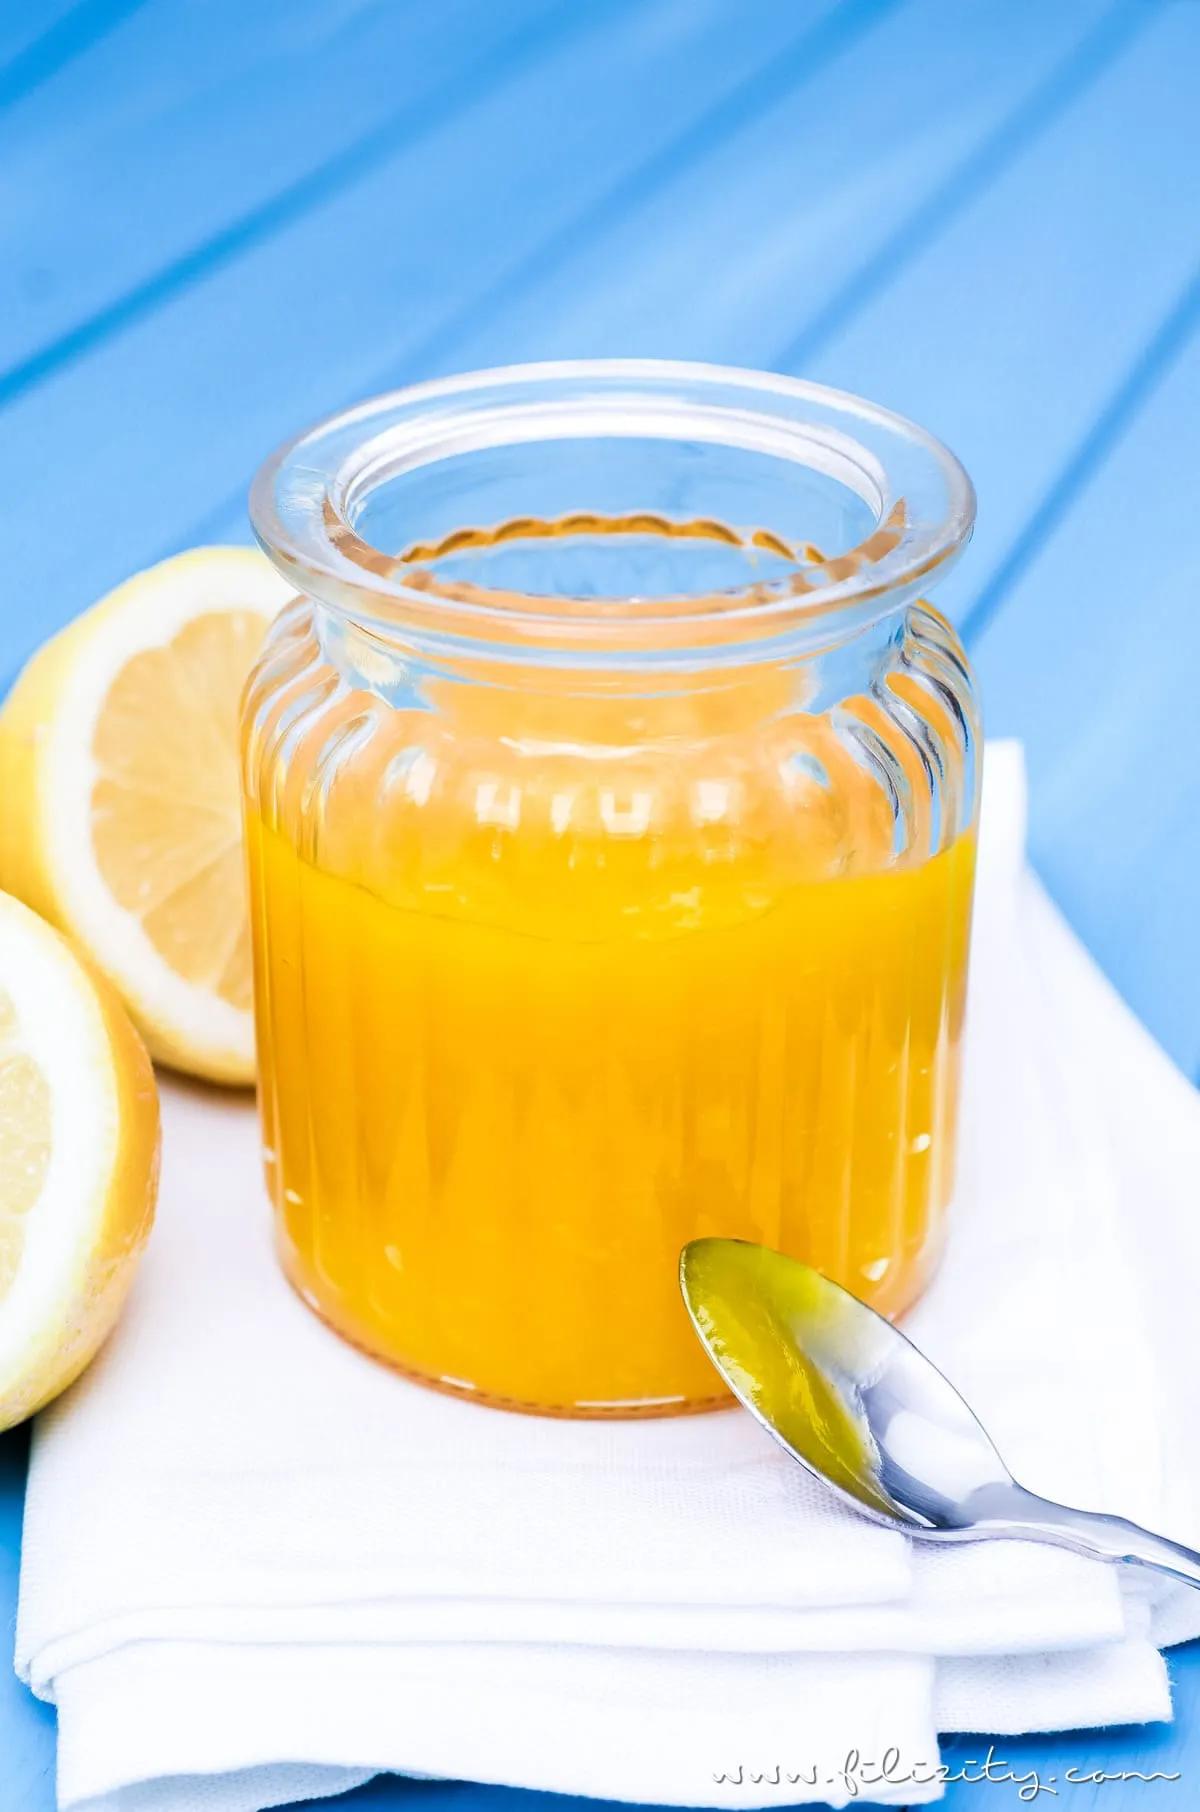 Mein bestes Lemon Curd Rezept zum Selbermachen | Filizity.com | Food ...